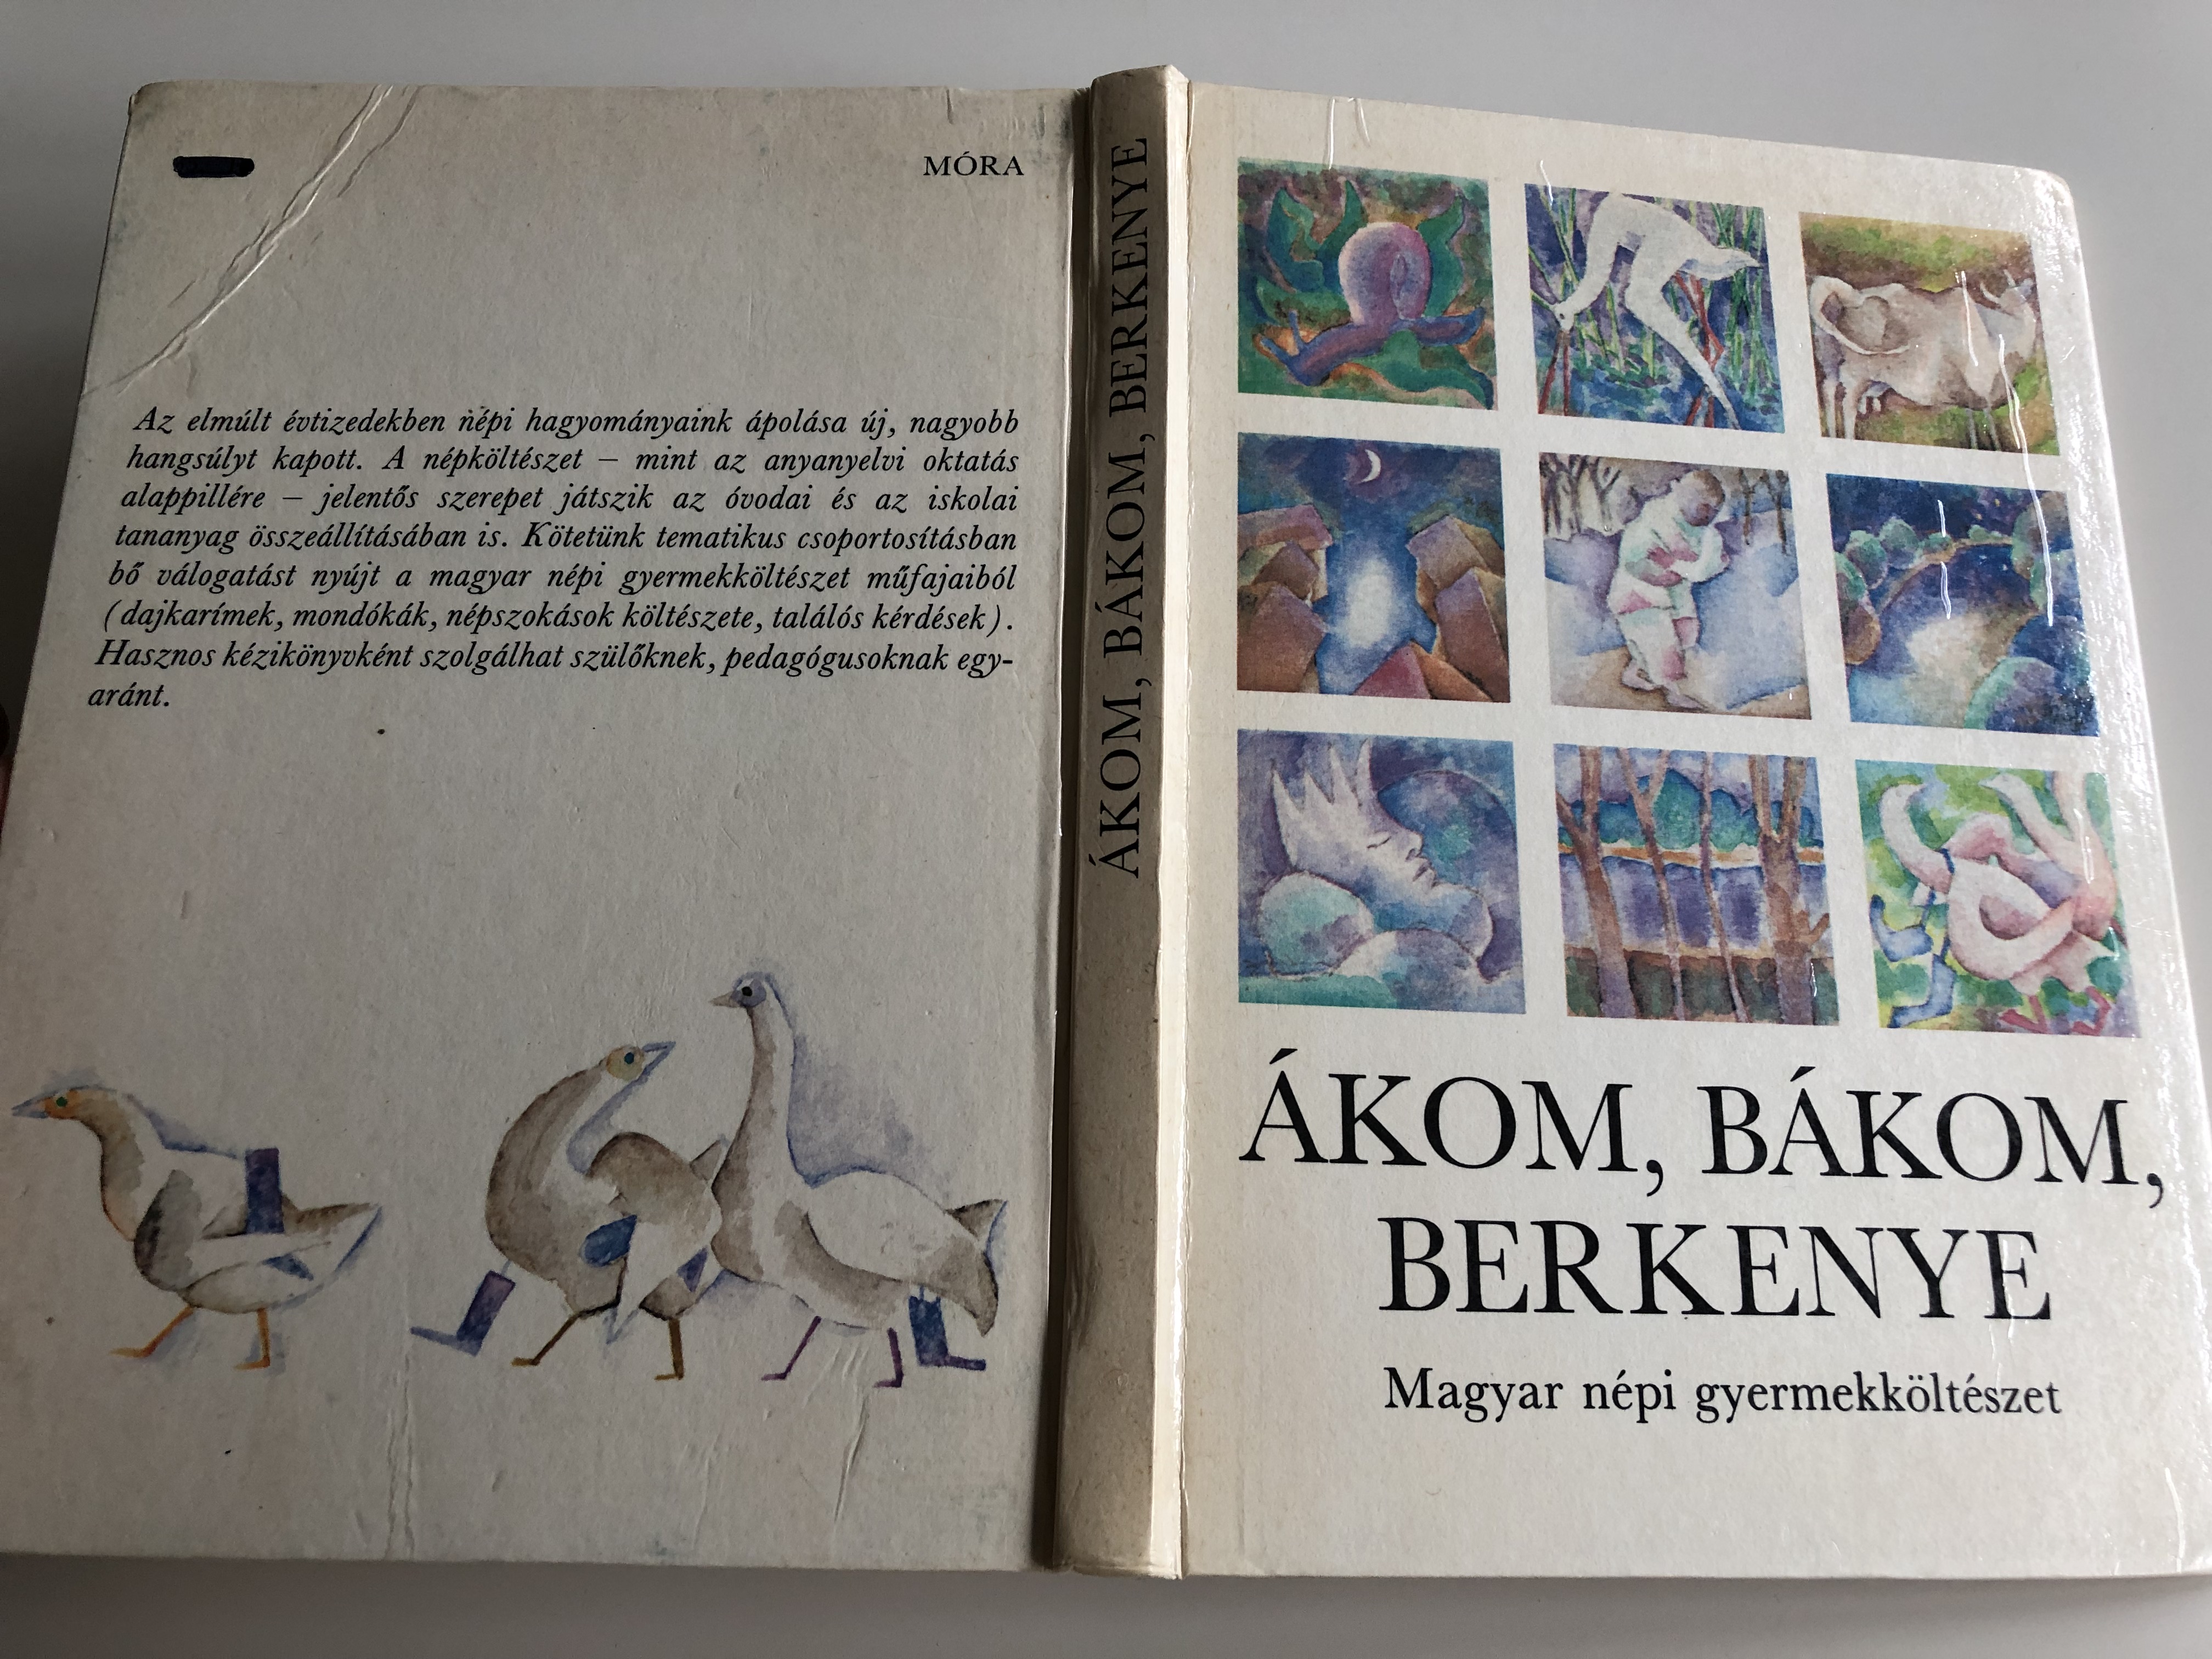 kom-b-kom-berkenye-magyar-n-pi-gyermekk-lt-szet-hungarian-childrens-folk-poems-for-nursery-and-kindergarten-age-22-.jpg